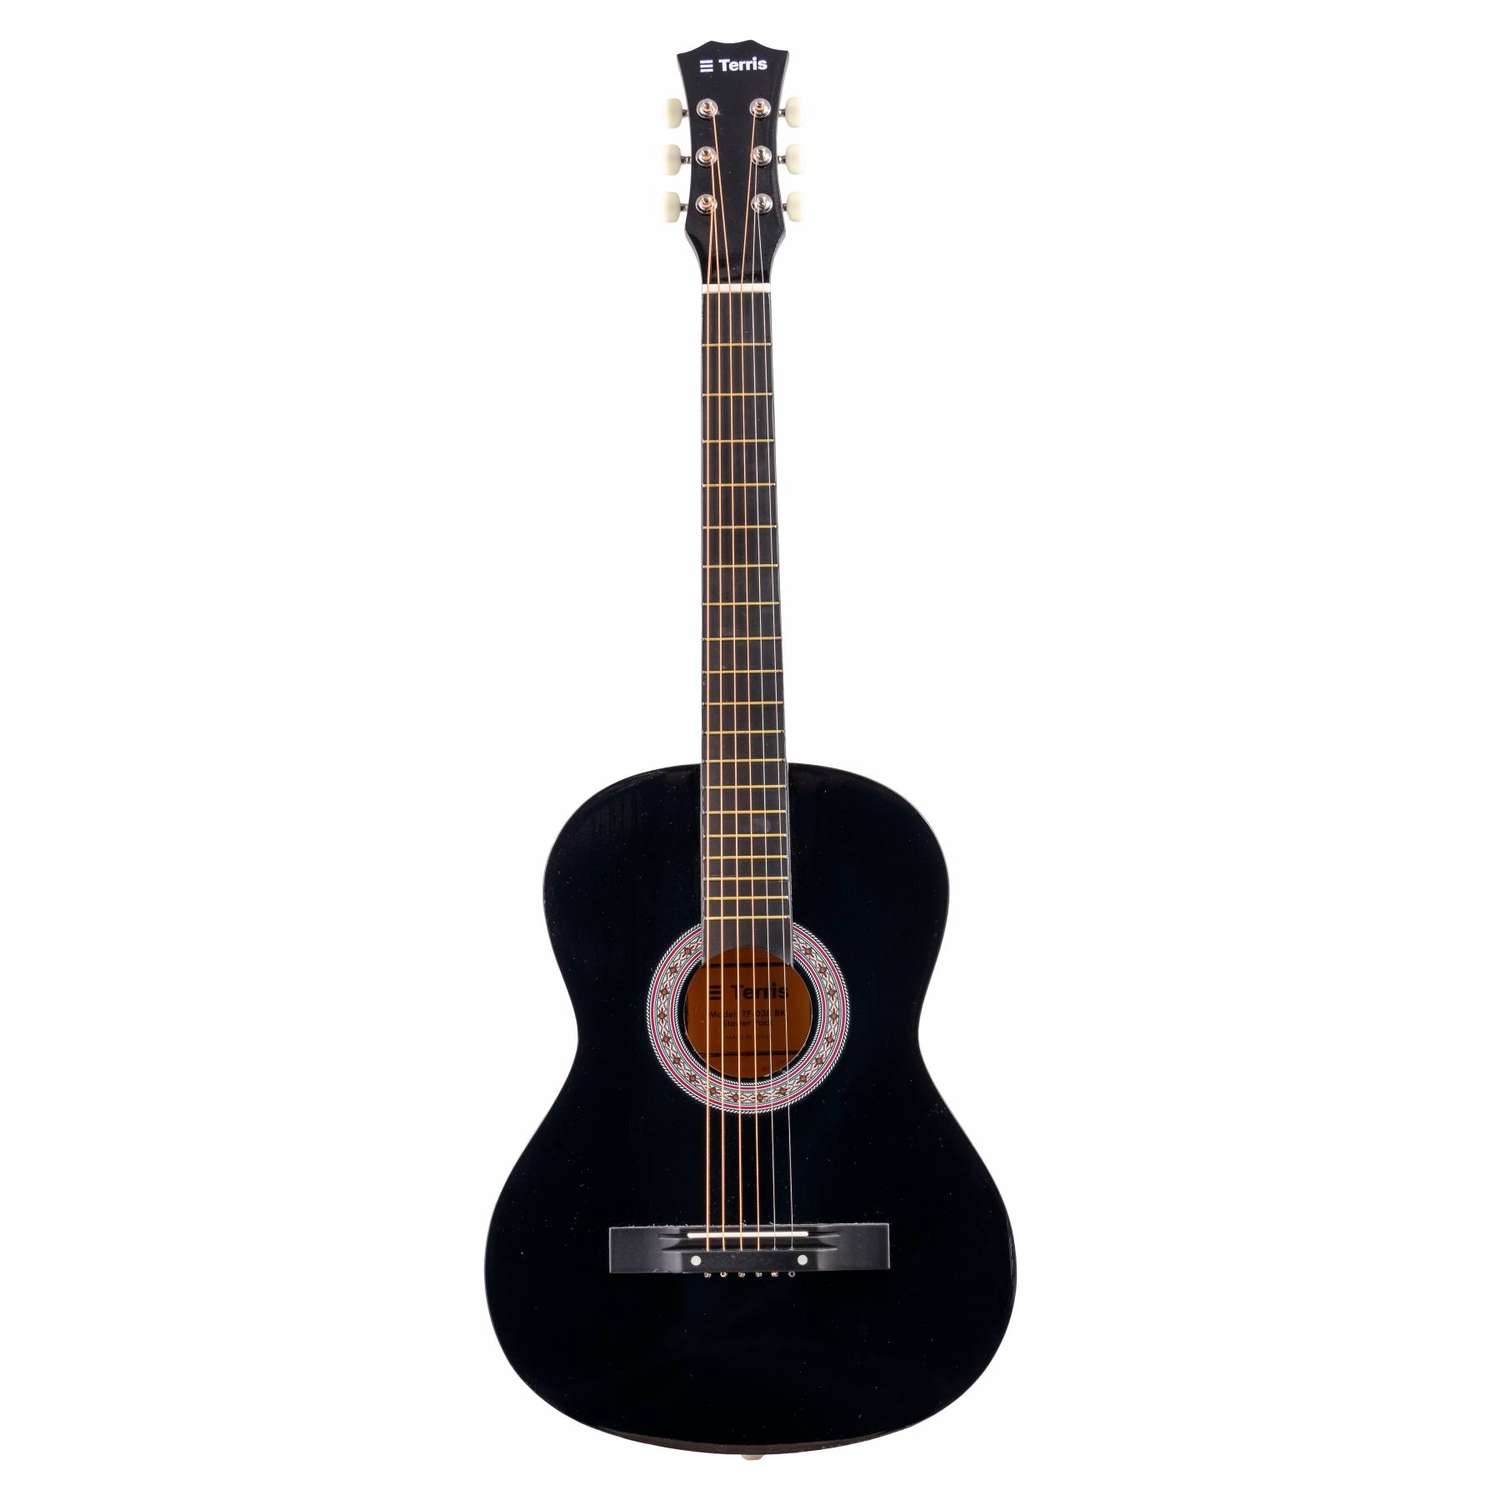 Набор гитариста Terris TF-038 BK Starter Pack фолк гитара черного цвета и комплект аксессуаров - фото 2